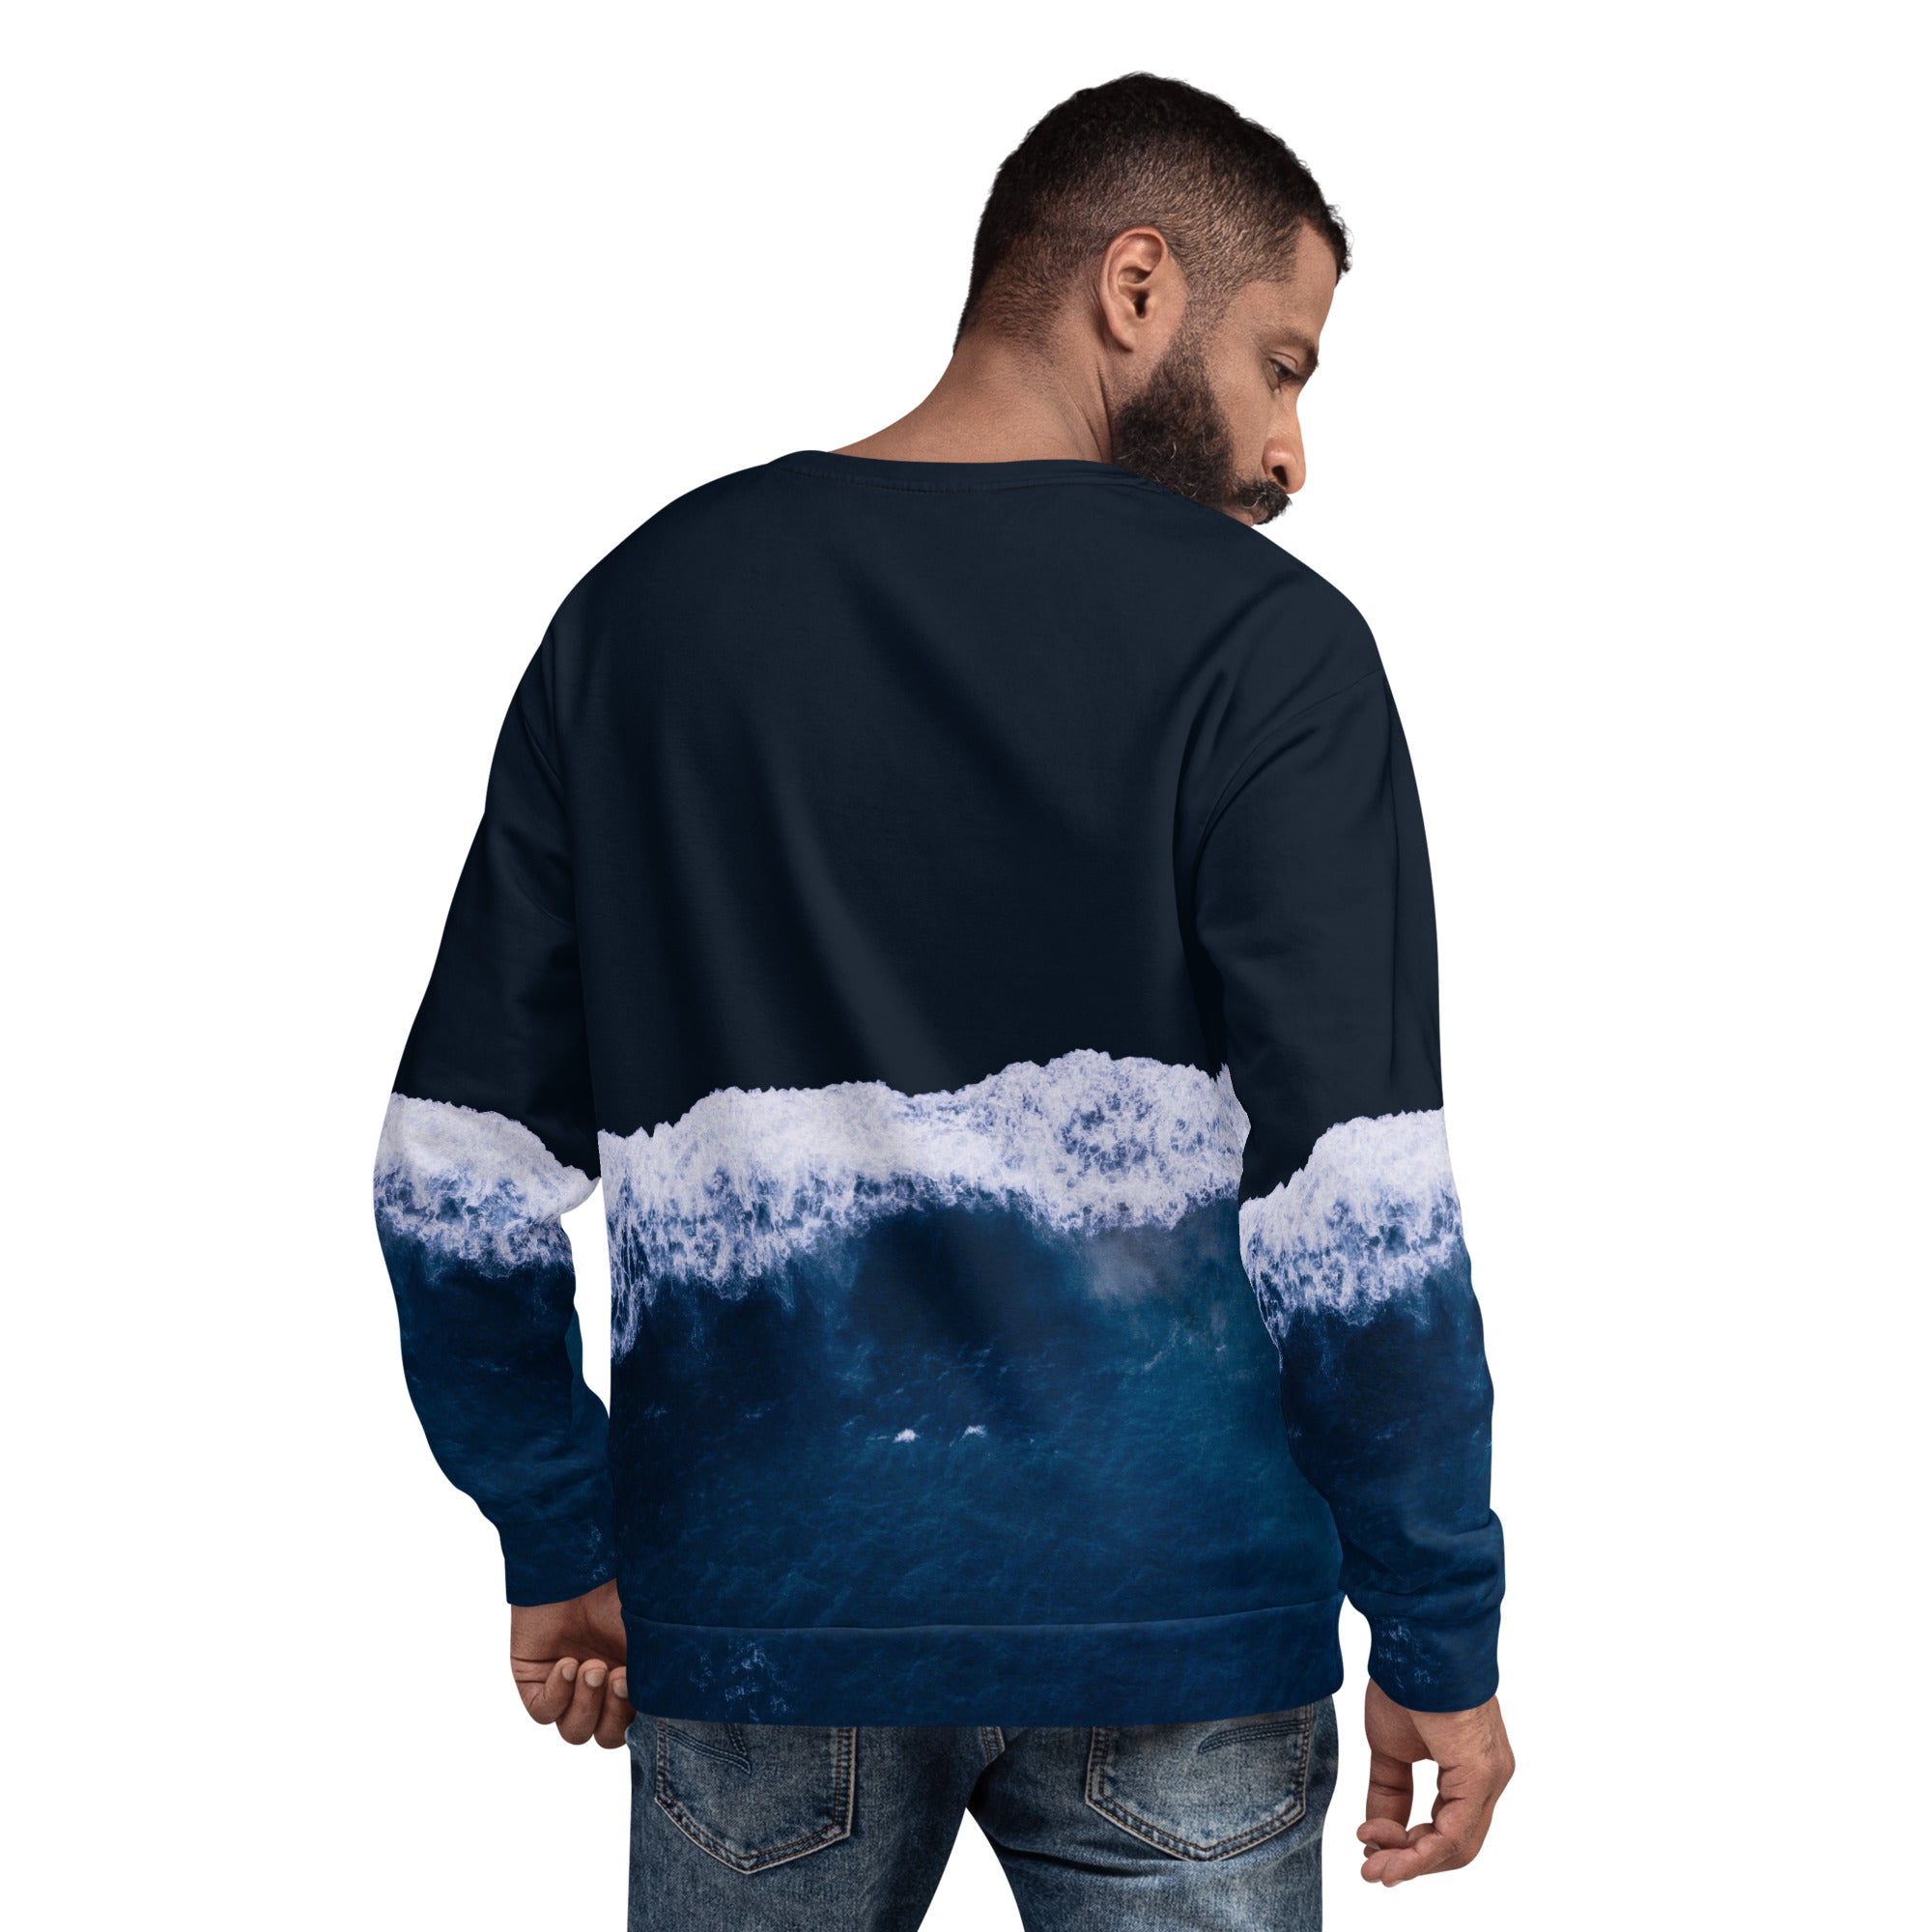 Midnights Crewneck Sweatshirt